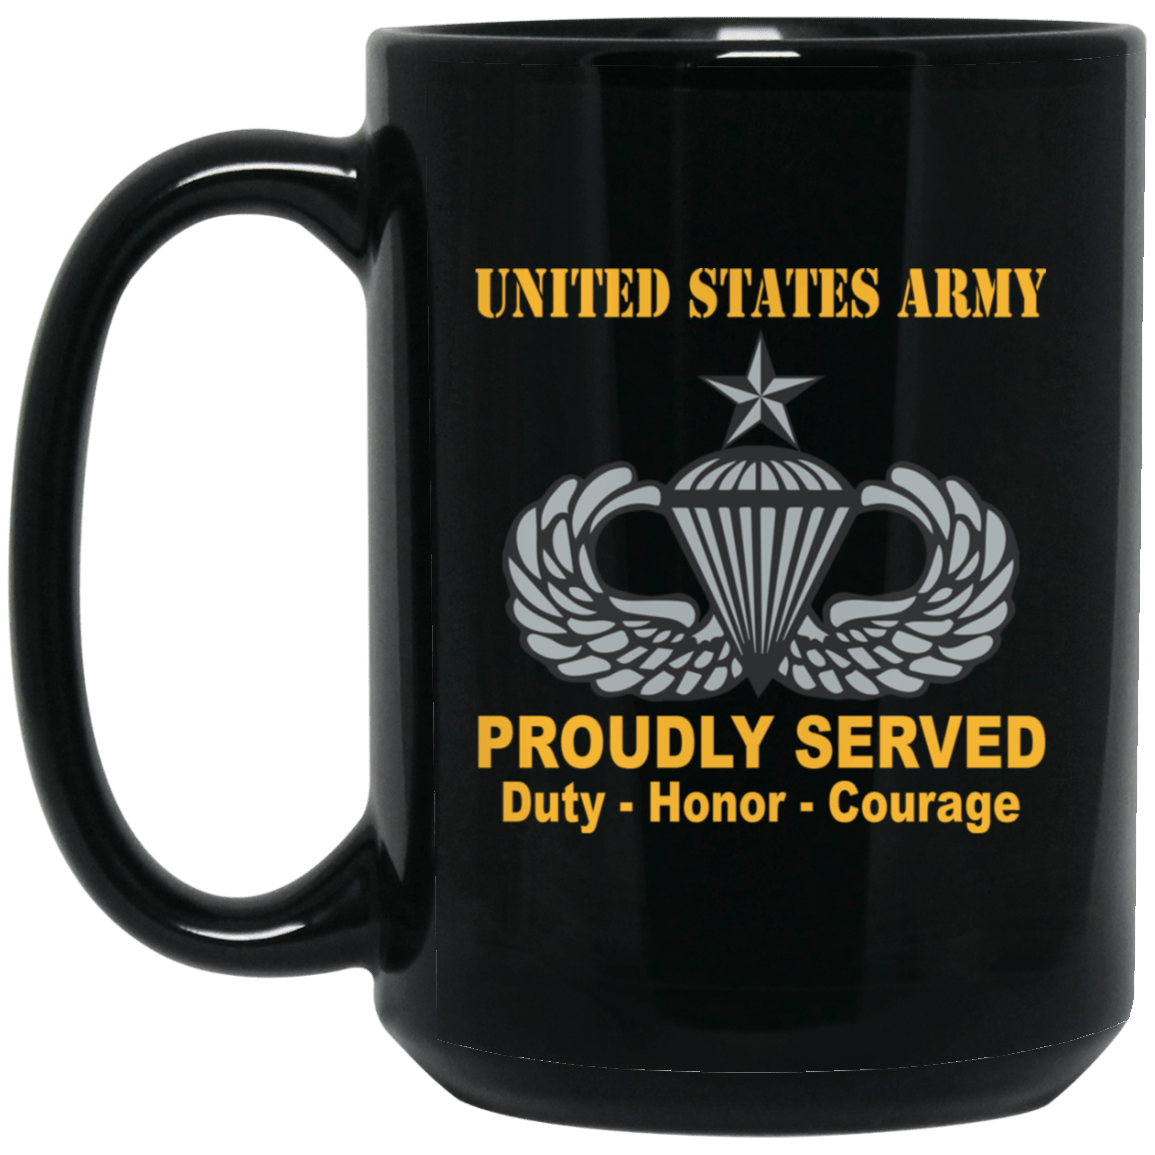 US Army Combat Badge Insignia Proudly Served Duty - Honor - Courage Black Coffee Mug 11oz-15oz-Mug-Army-Veterans Nation